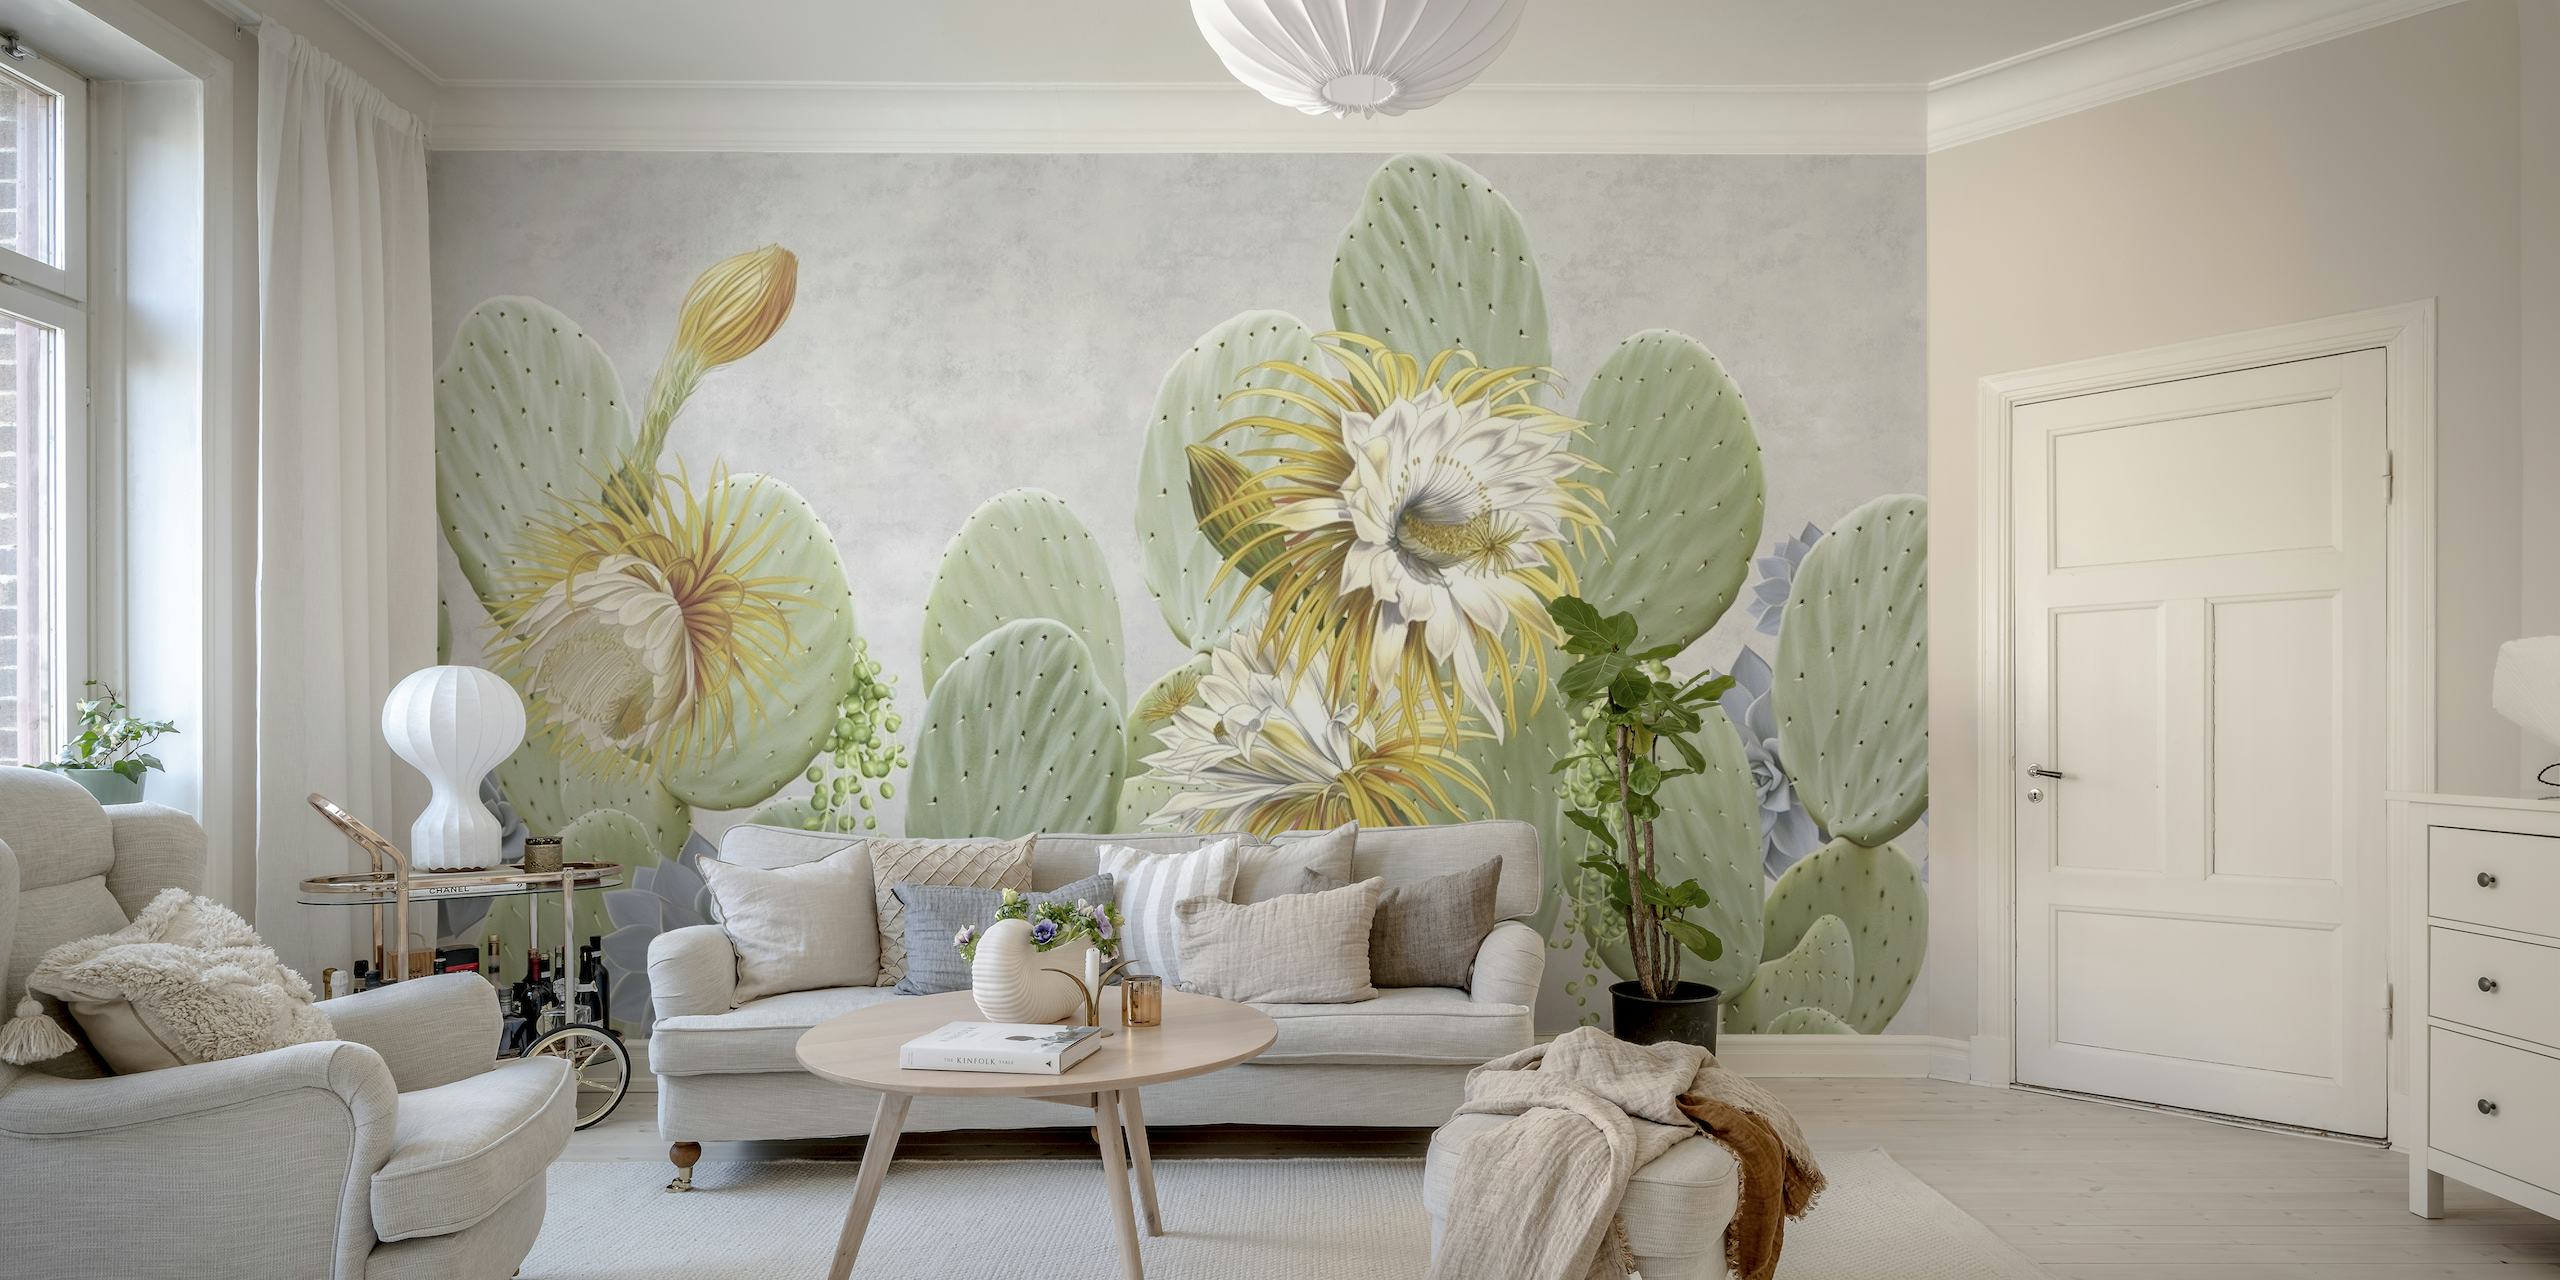 Flowering Cacti wall mural with blooming desert plants